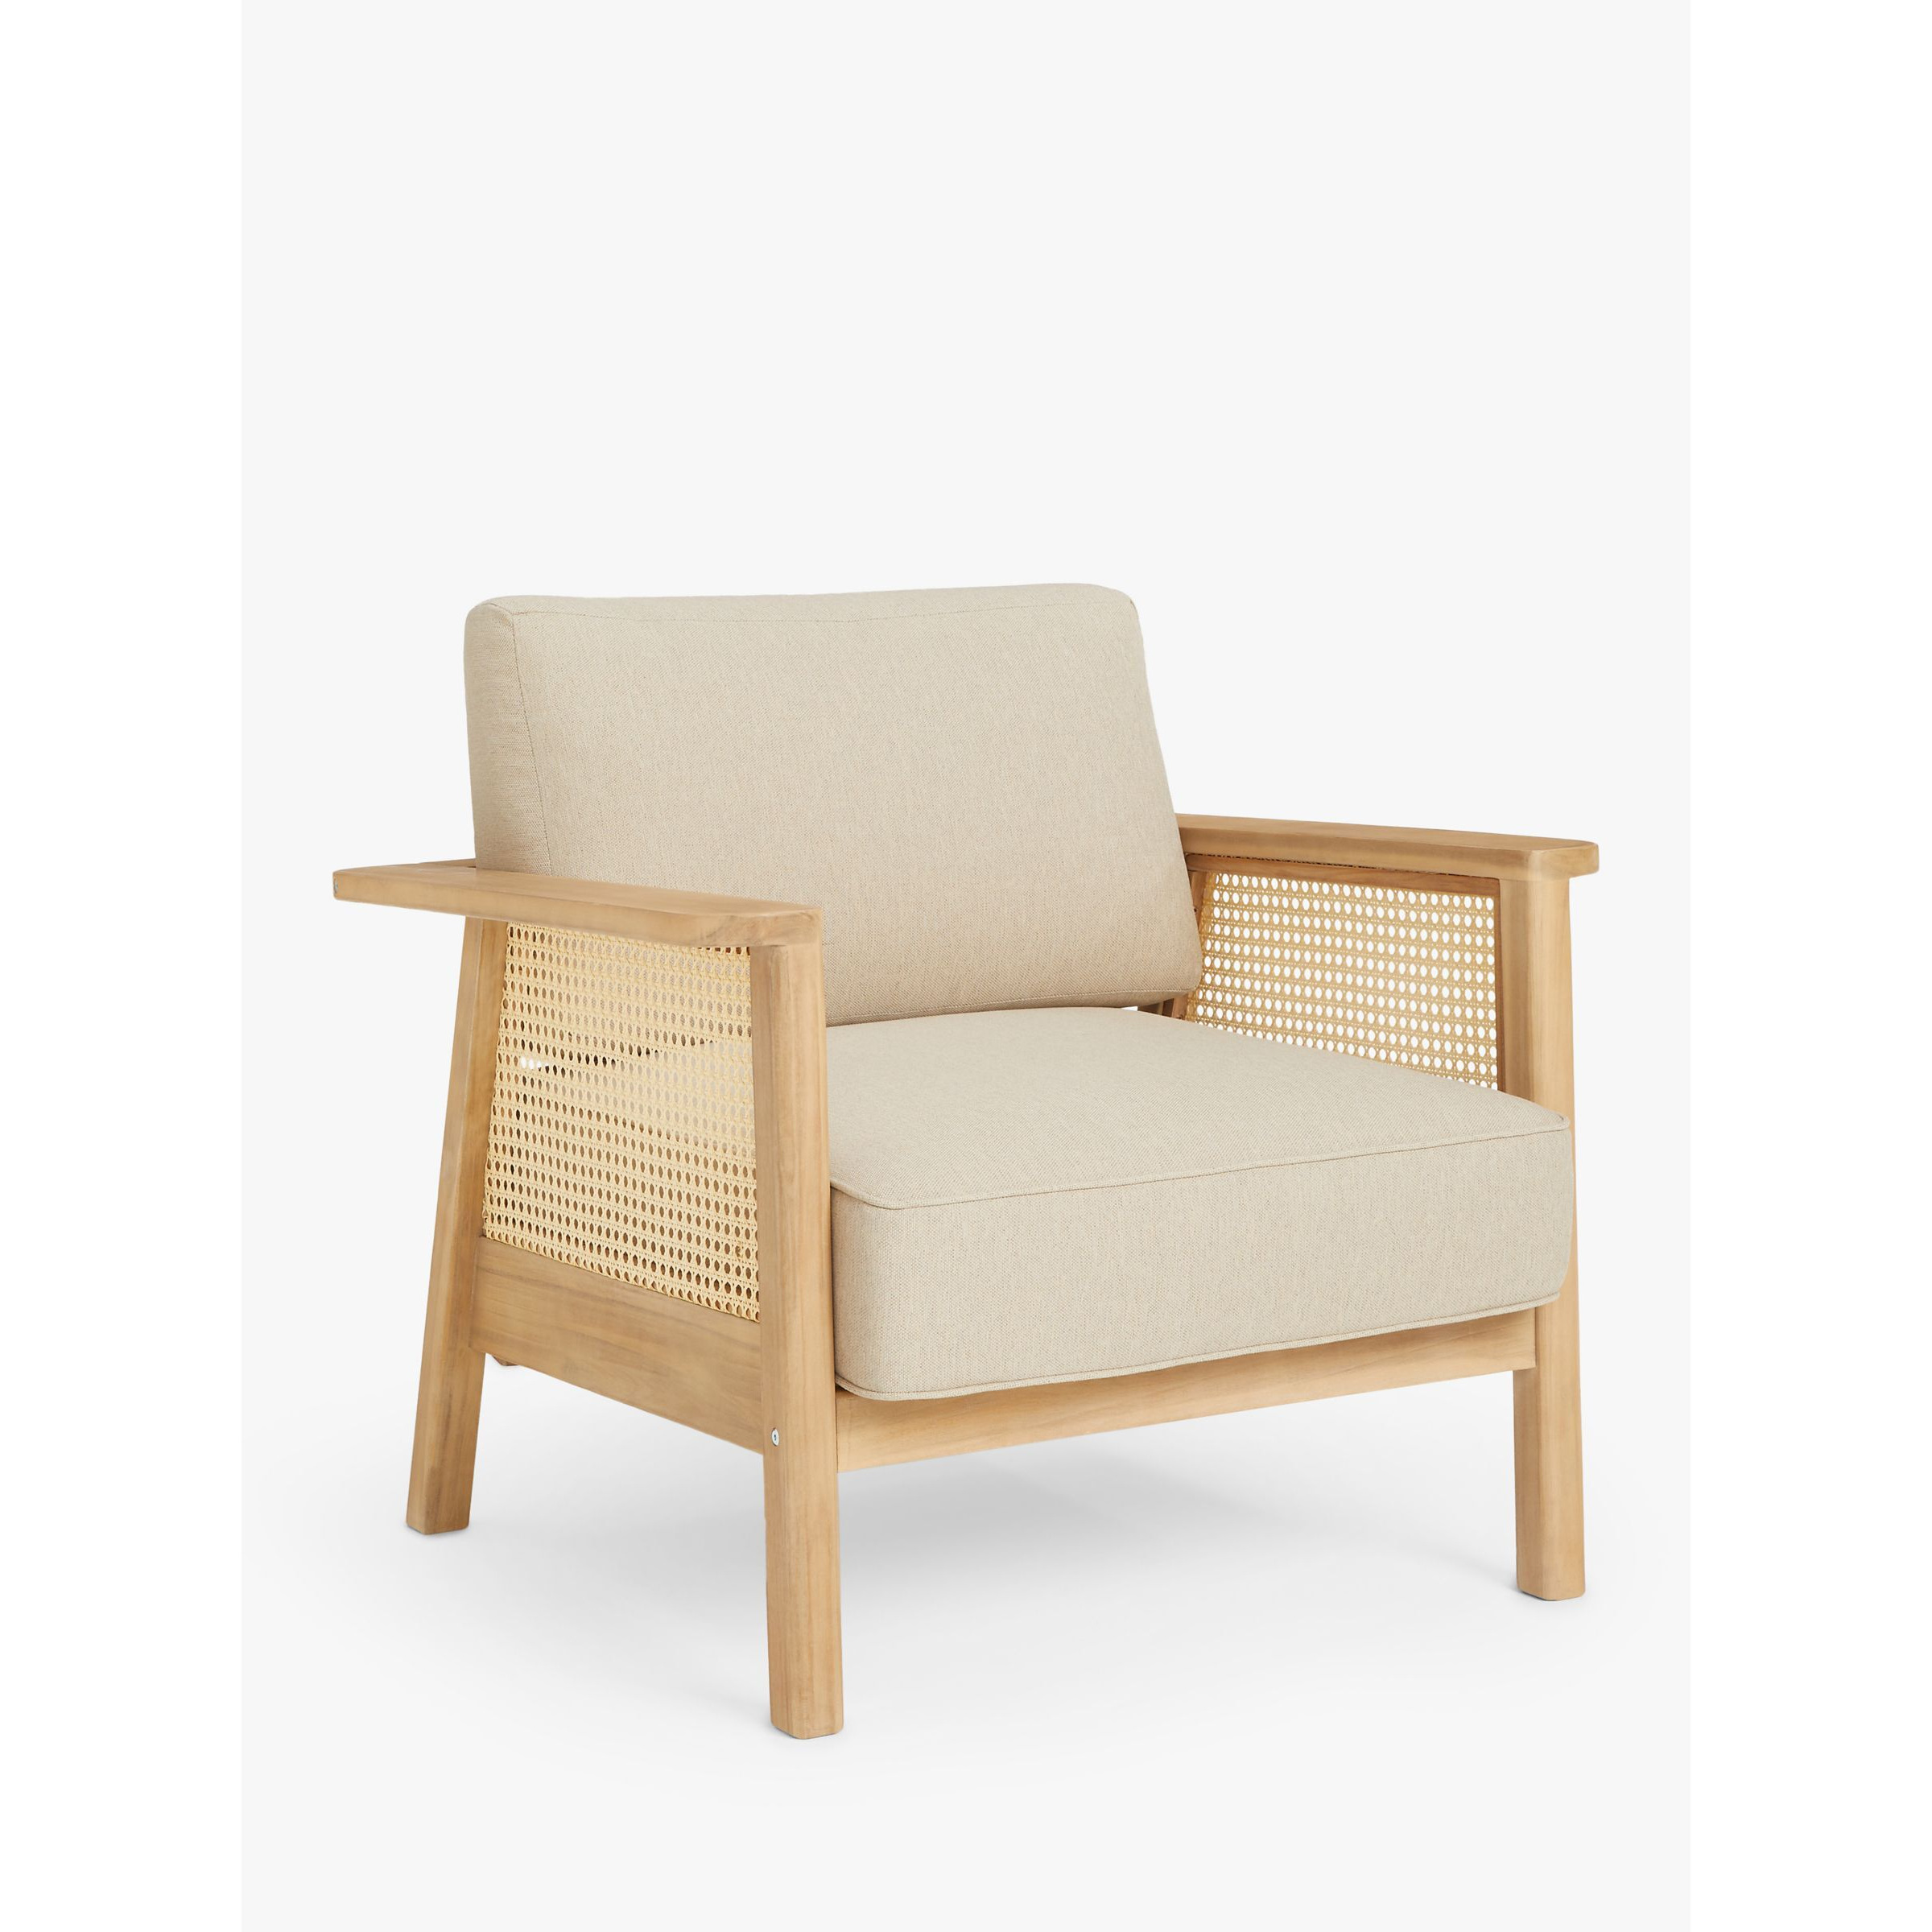 John Lewis Rattan Garden Lounge Chair, FSC-Certified (Acacia Wood), Natural - image 1